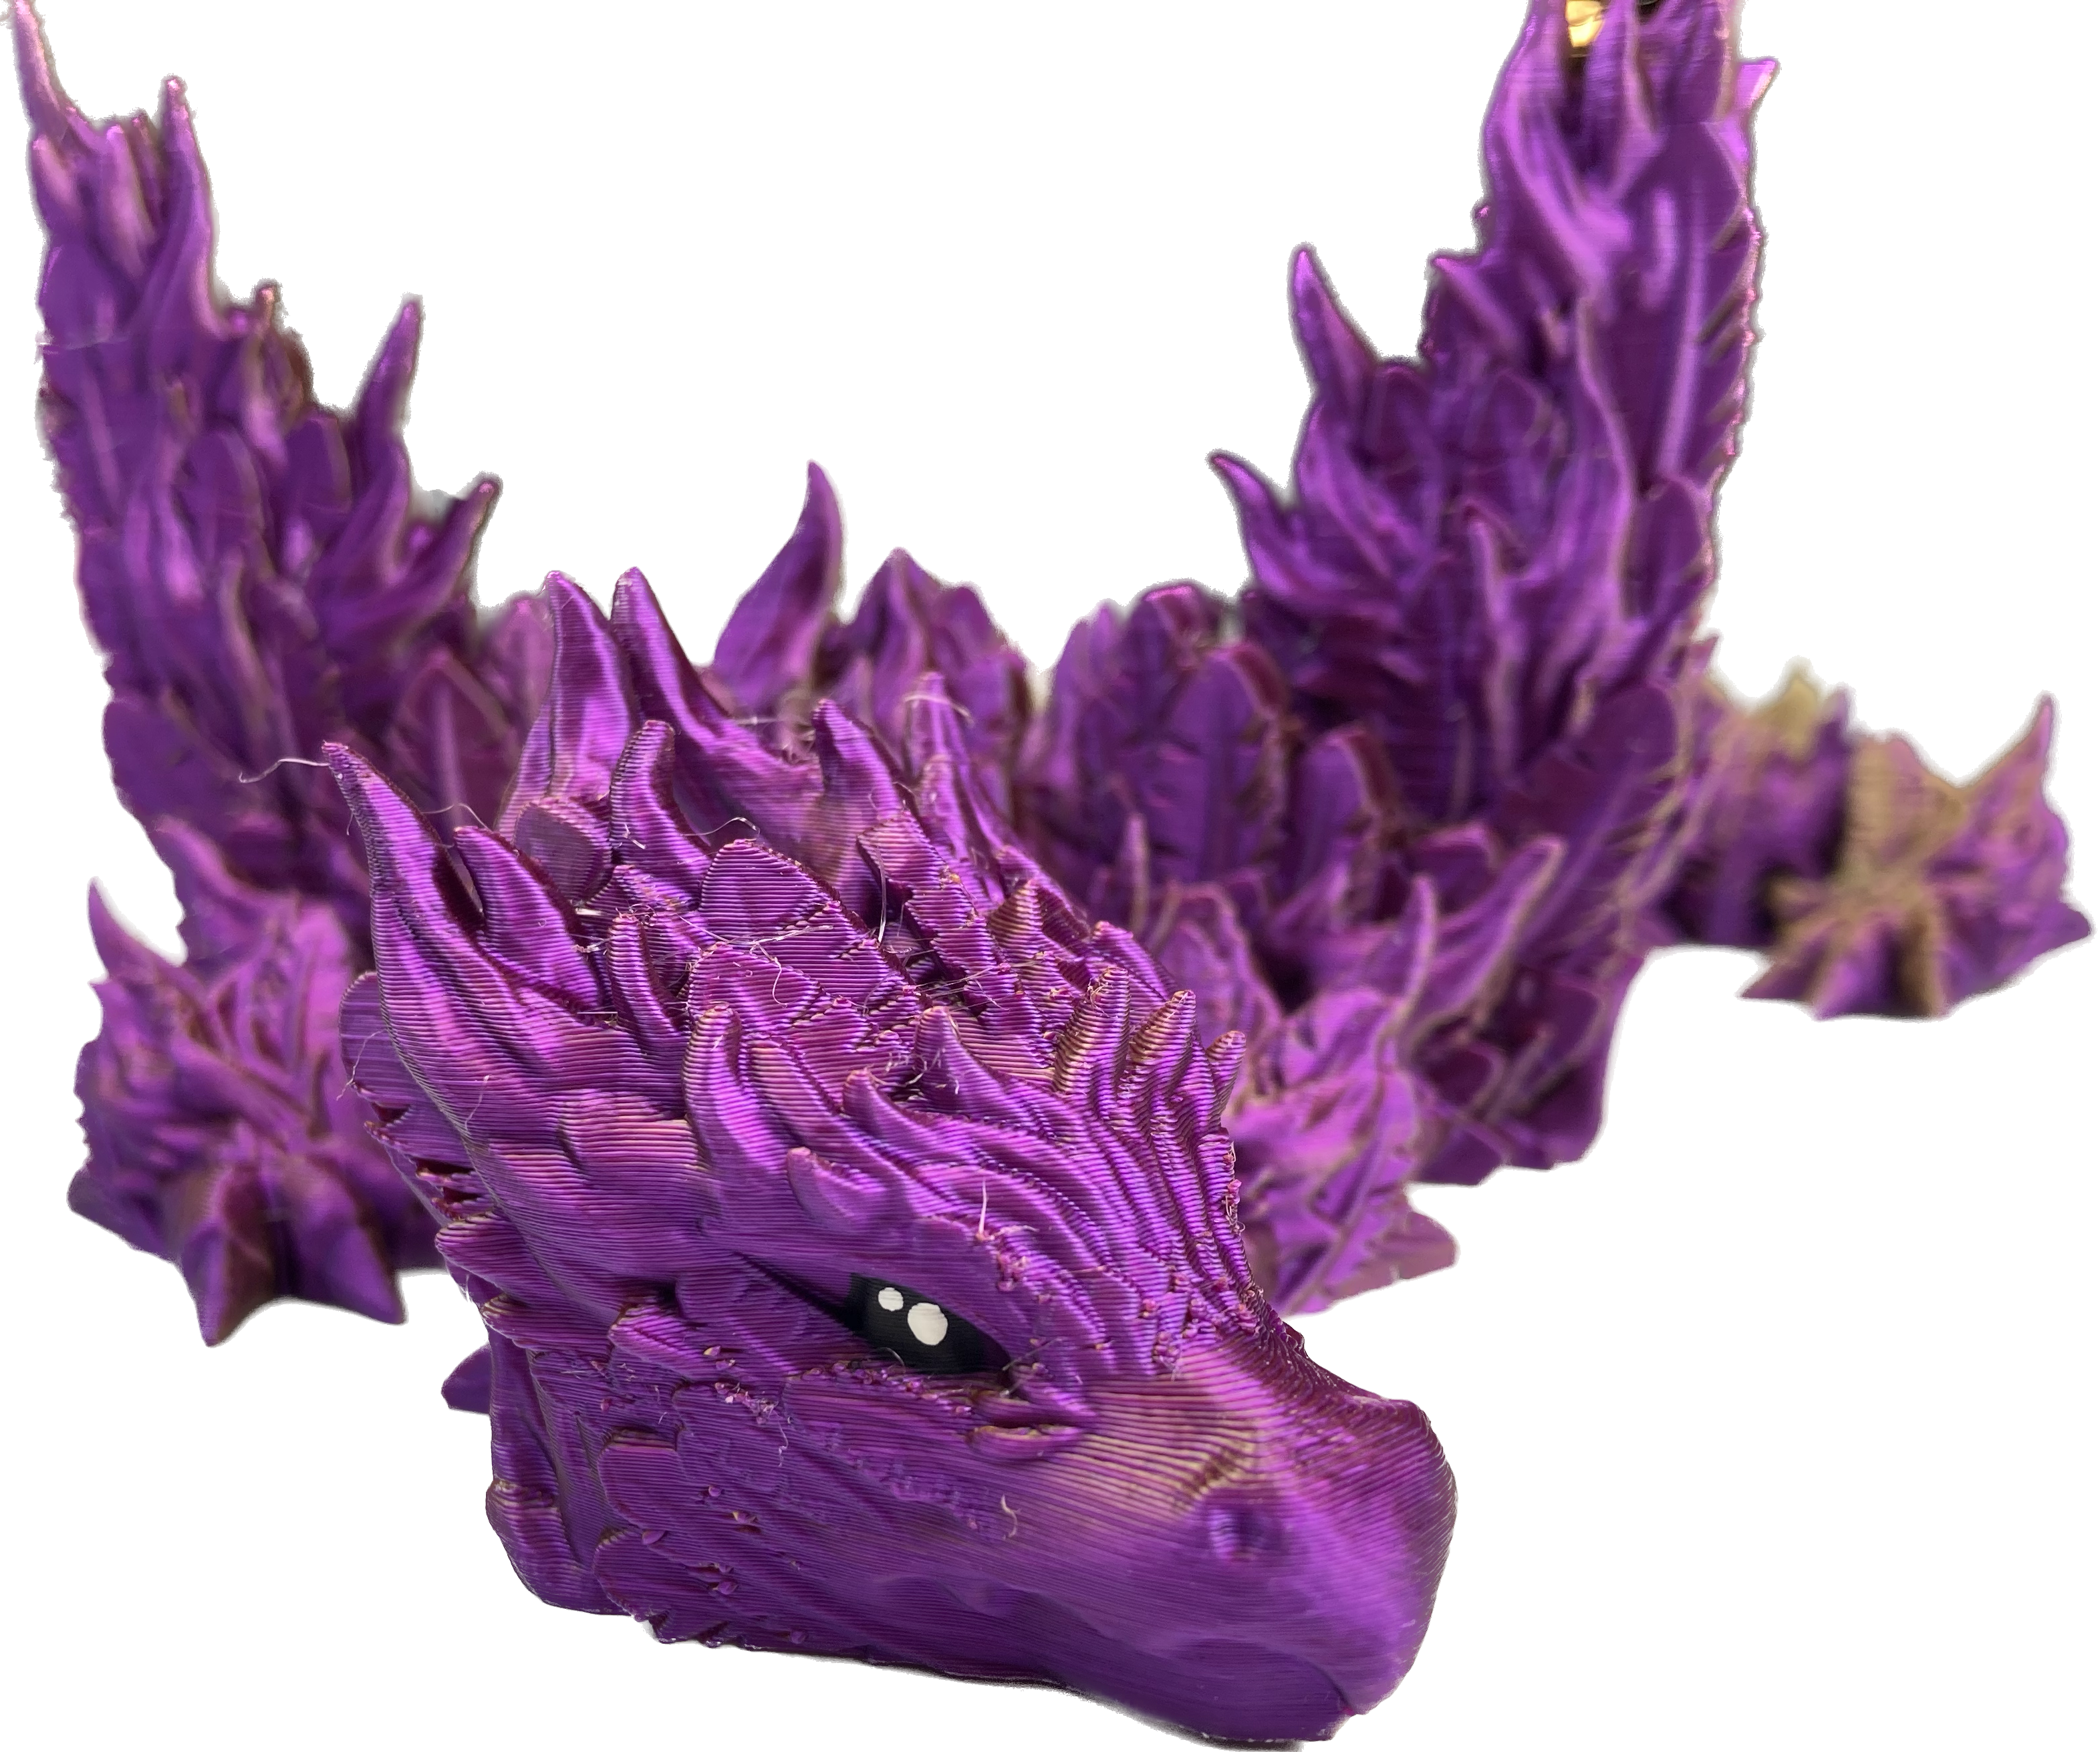 Pheonix Dragon